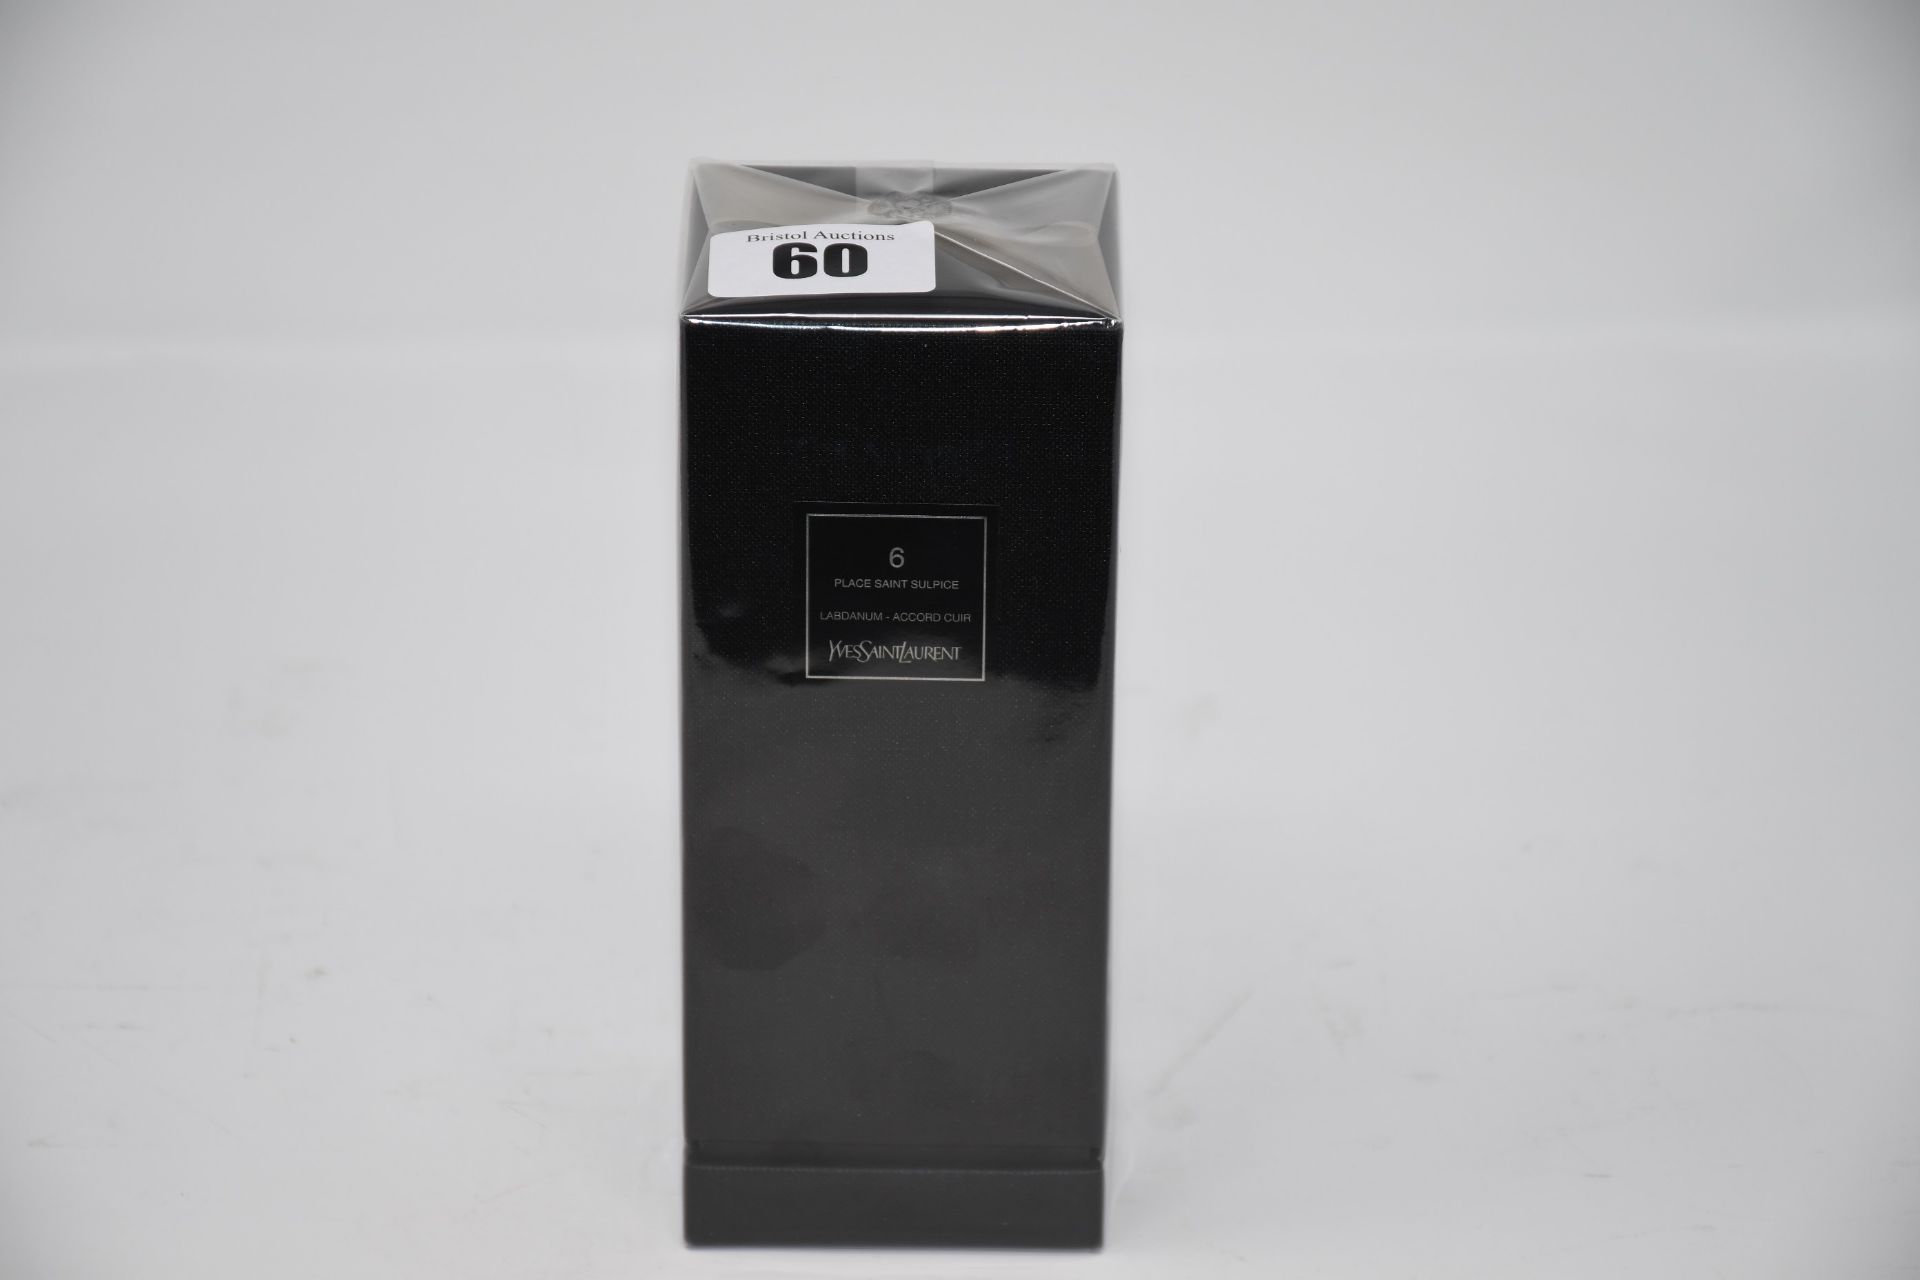 One boxed as new Yves Saint Laurent Labdanum - Accord Cuir eau de parfum (125ml).